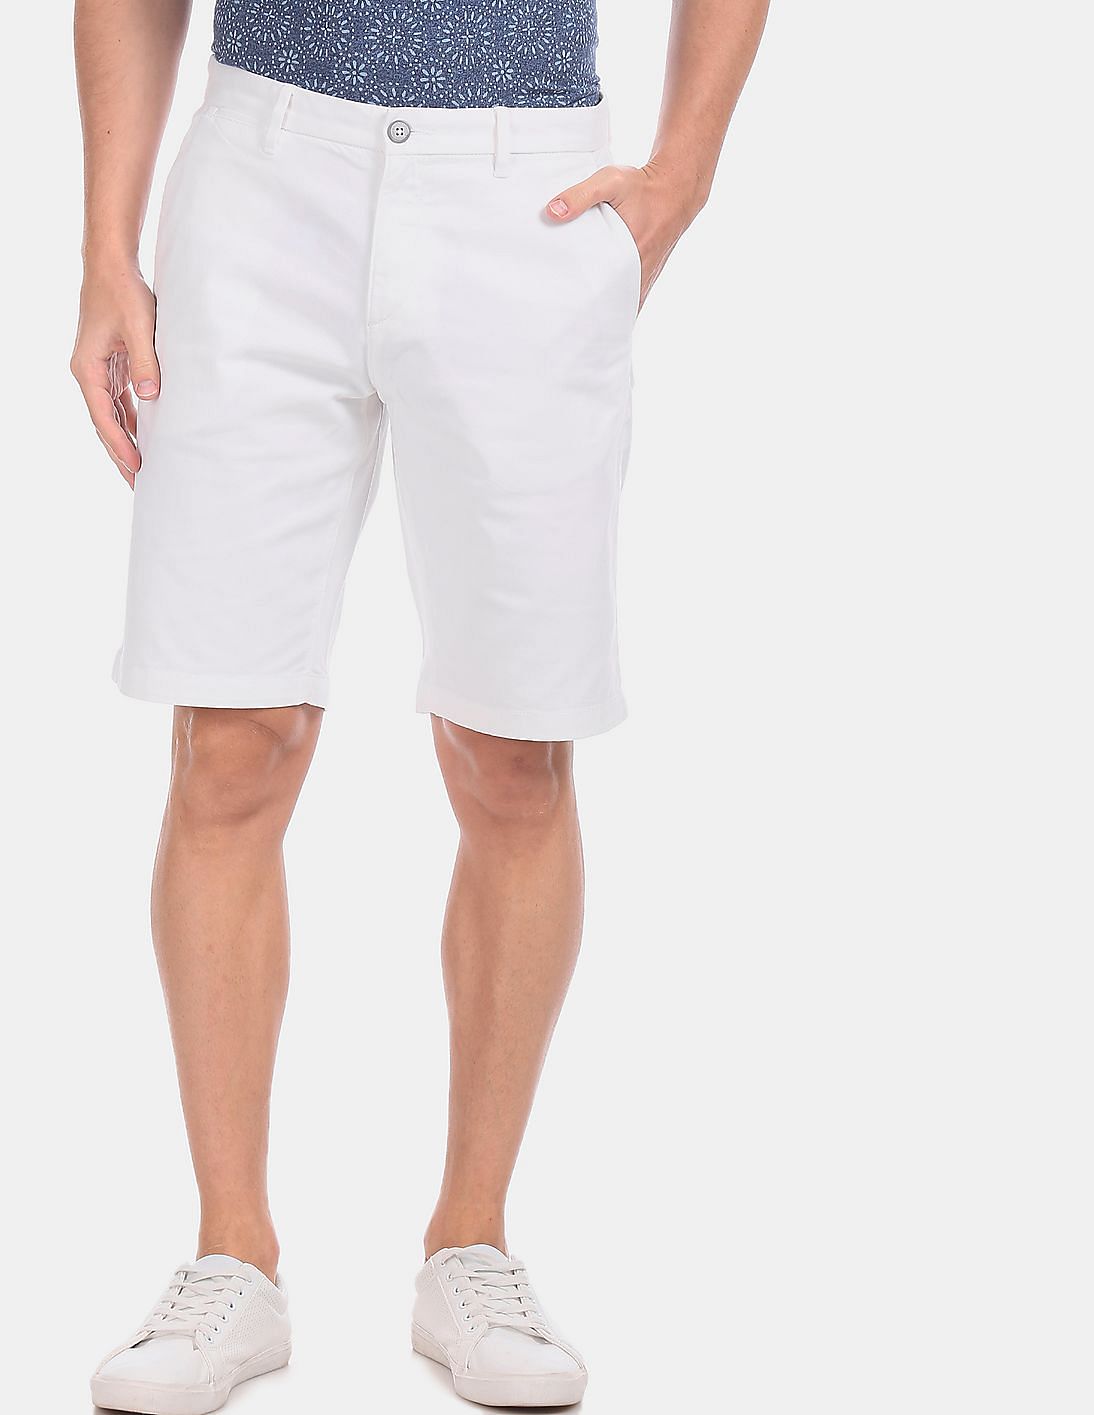 Buy U.S. Polo Assn. Men White Solid Cotton Stretch Shorts - NNNOW.com